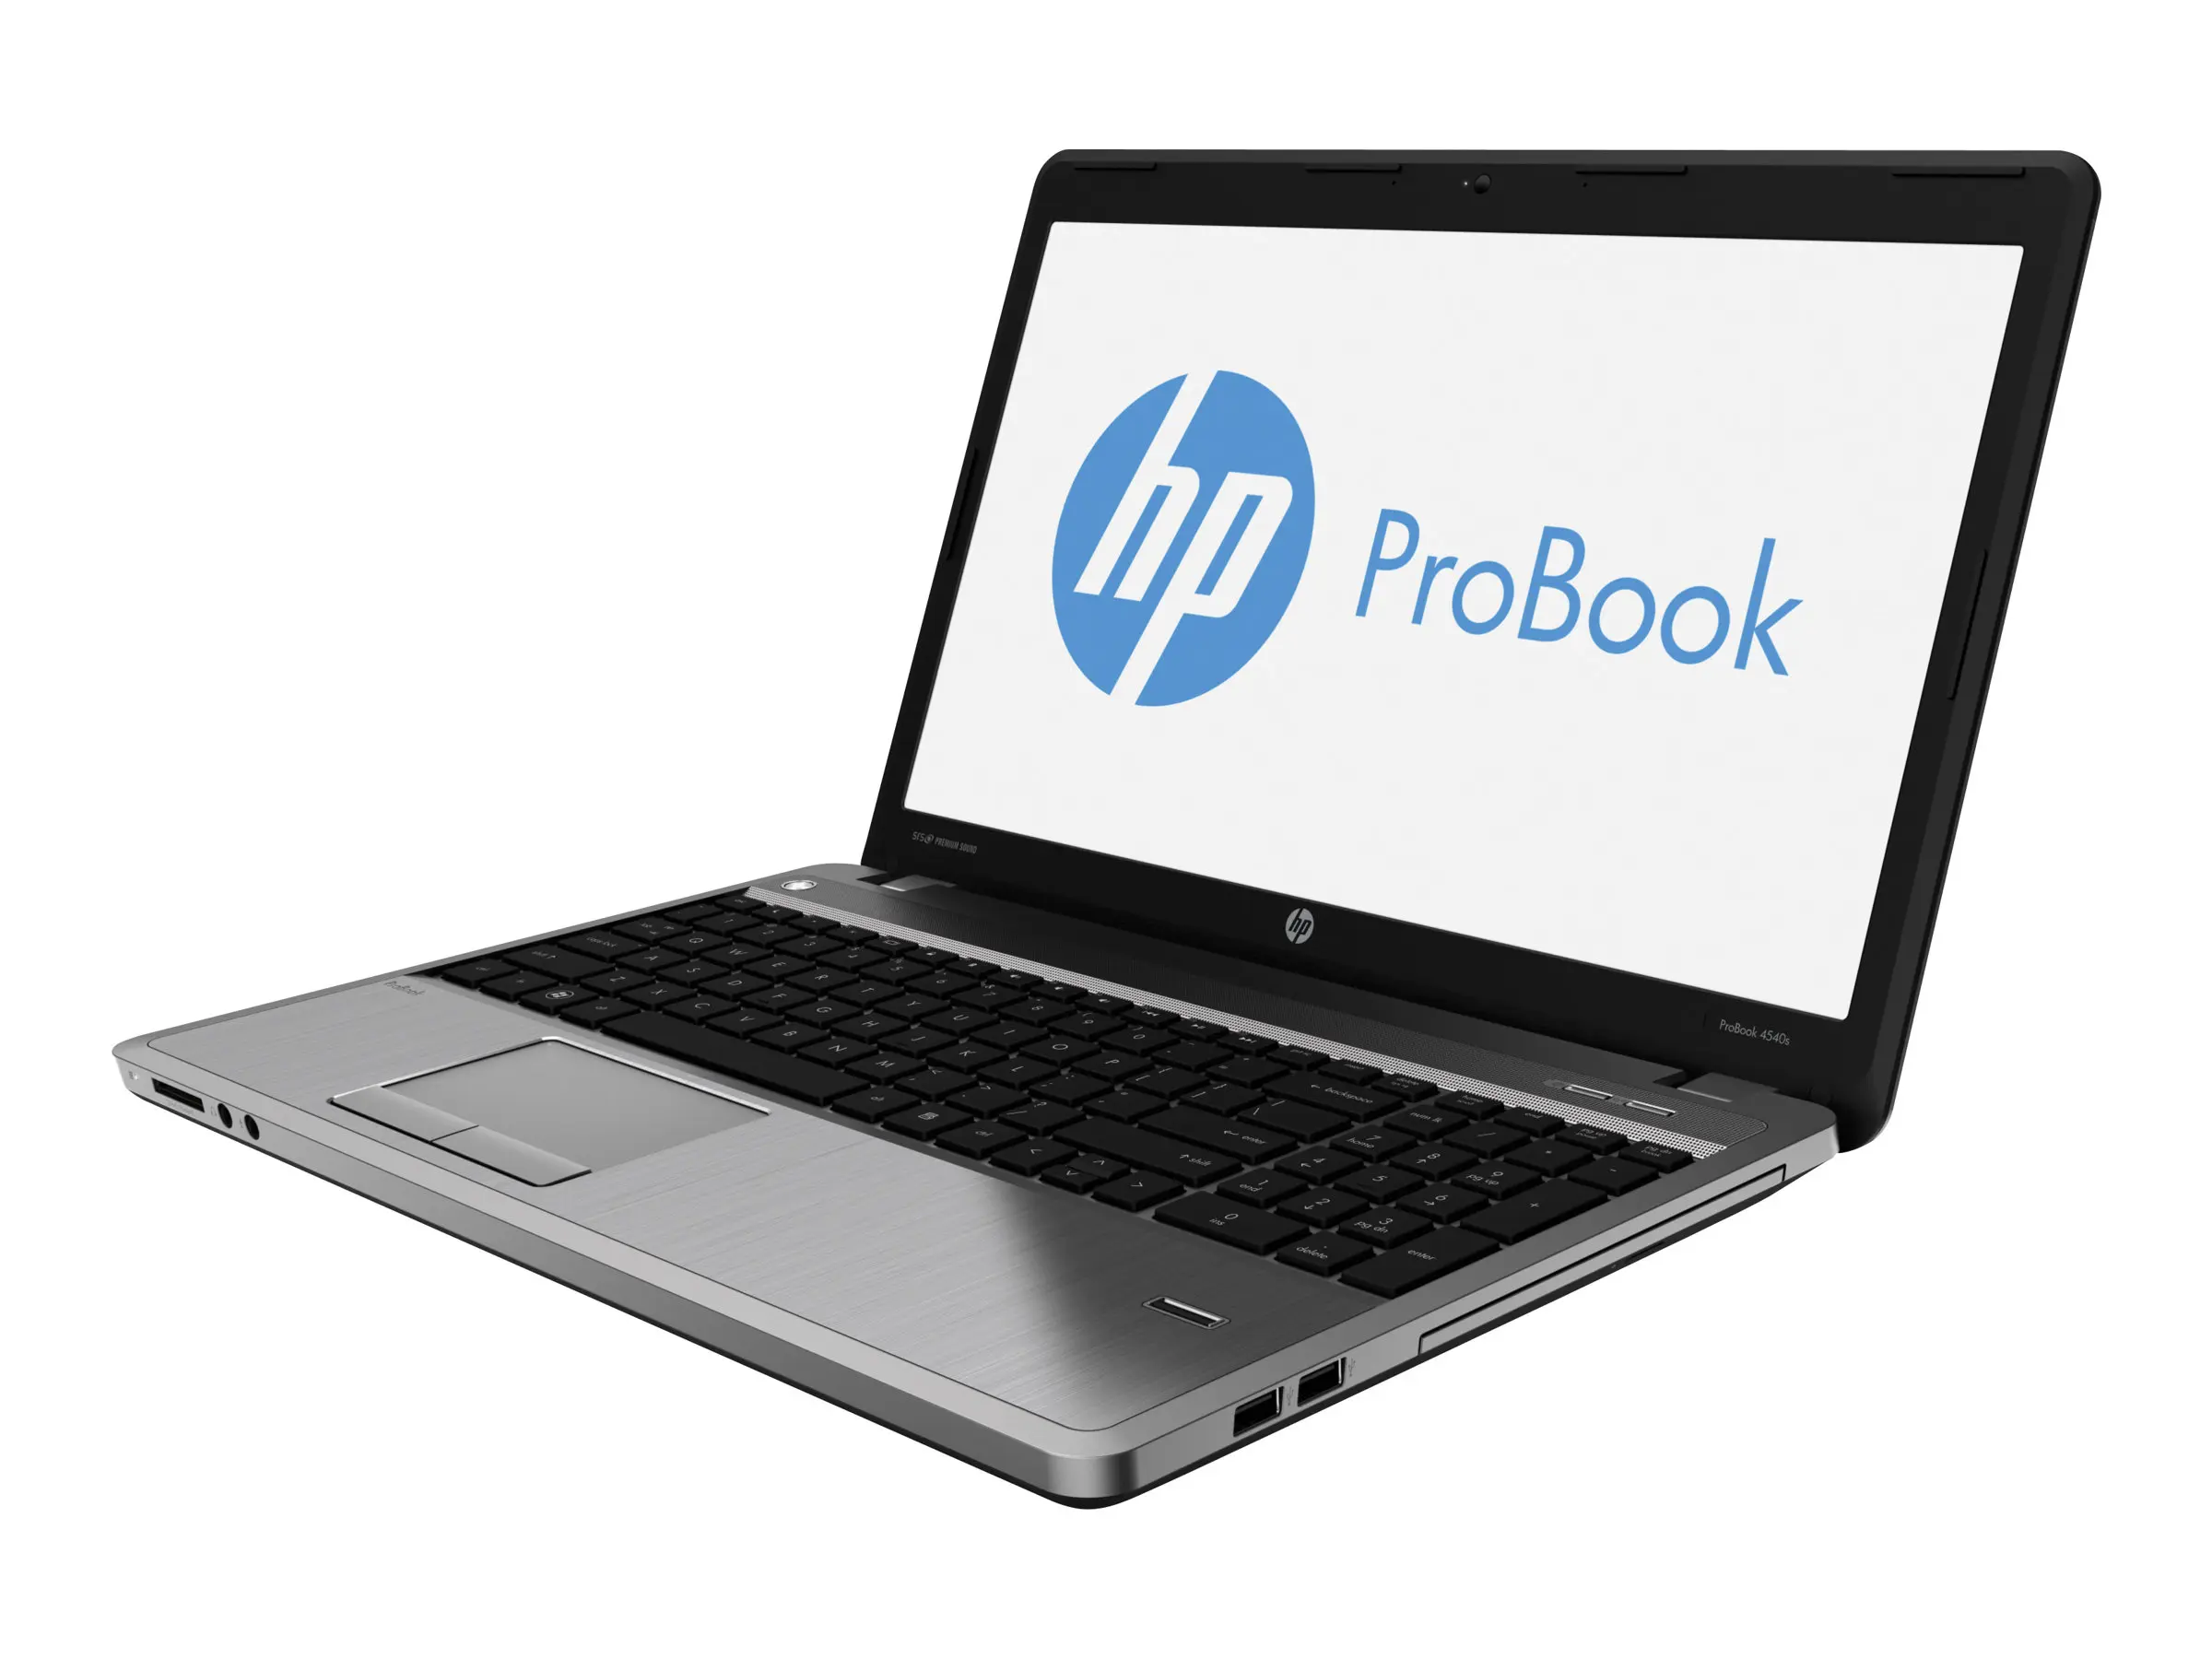 hewlett packard 4540s - Does HP ProBook 4540s have WIFI